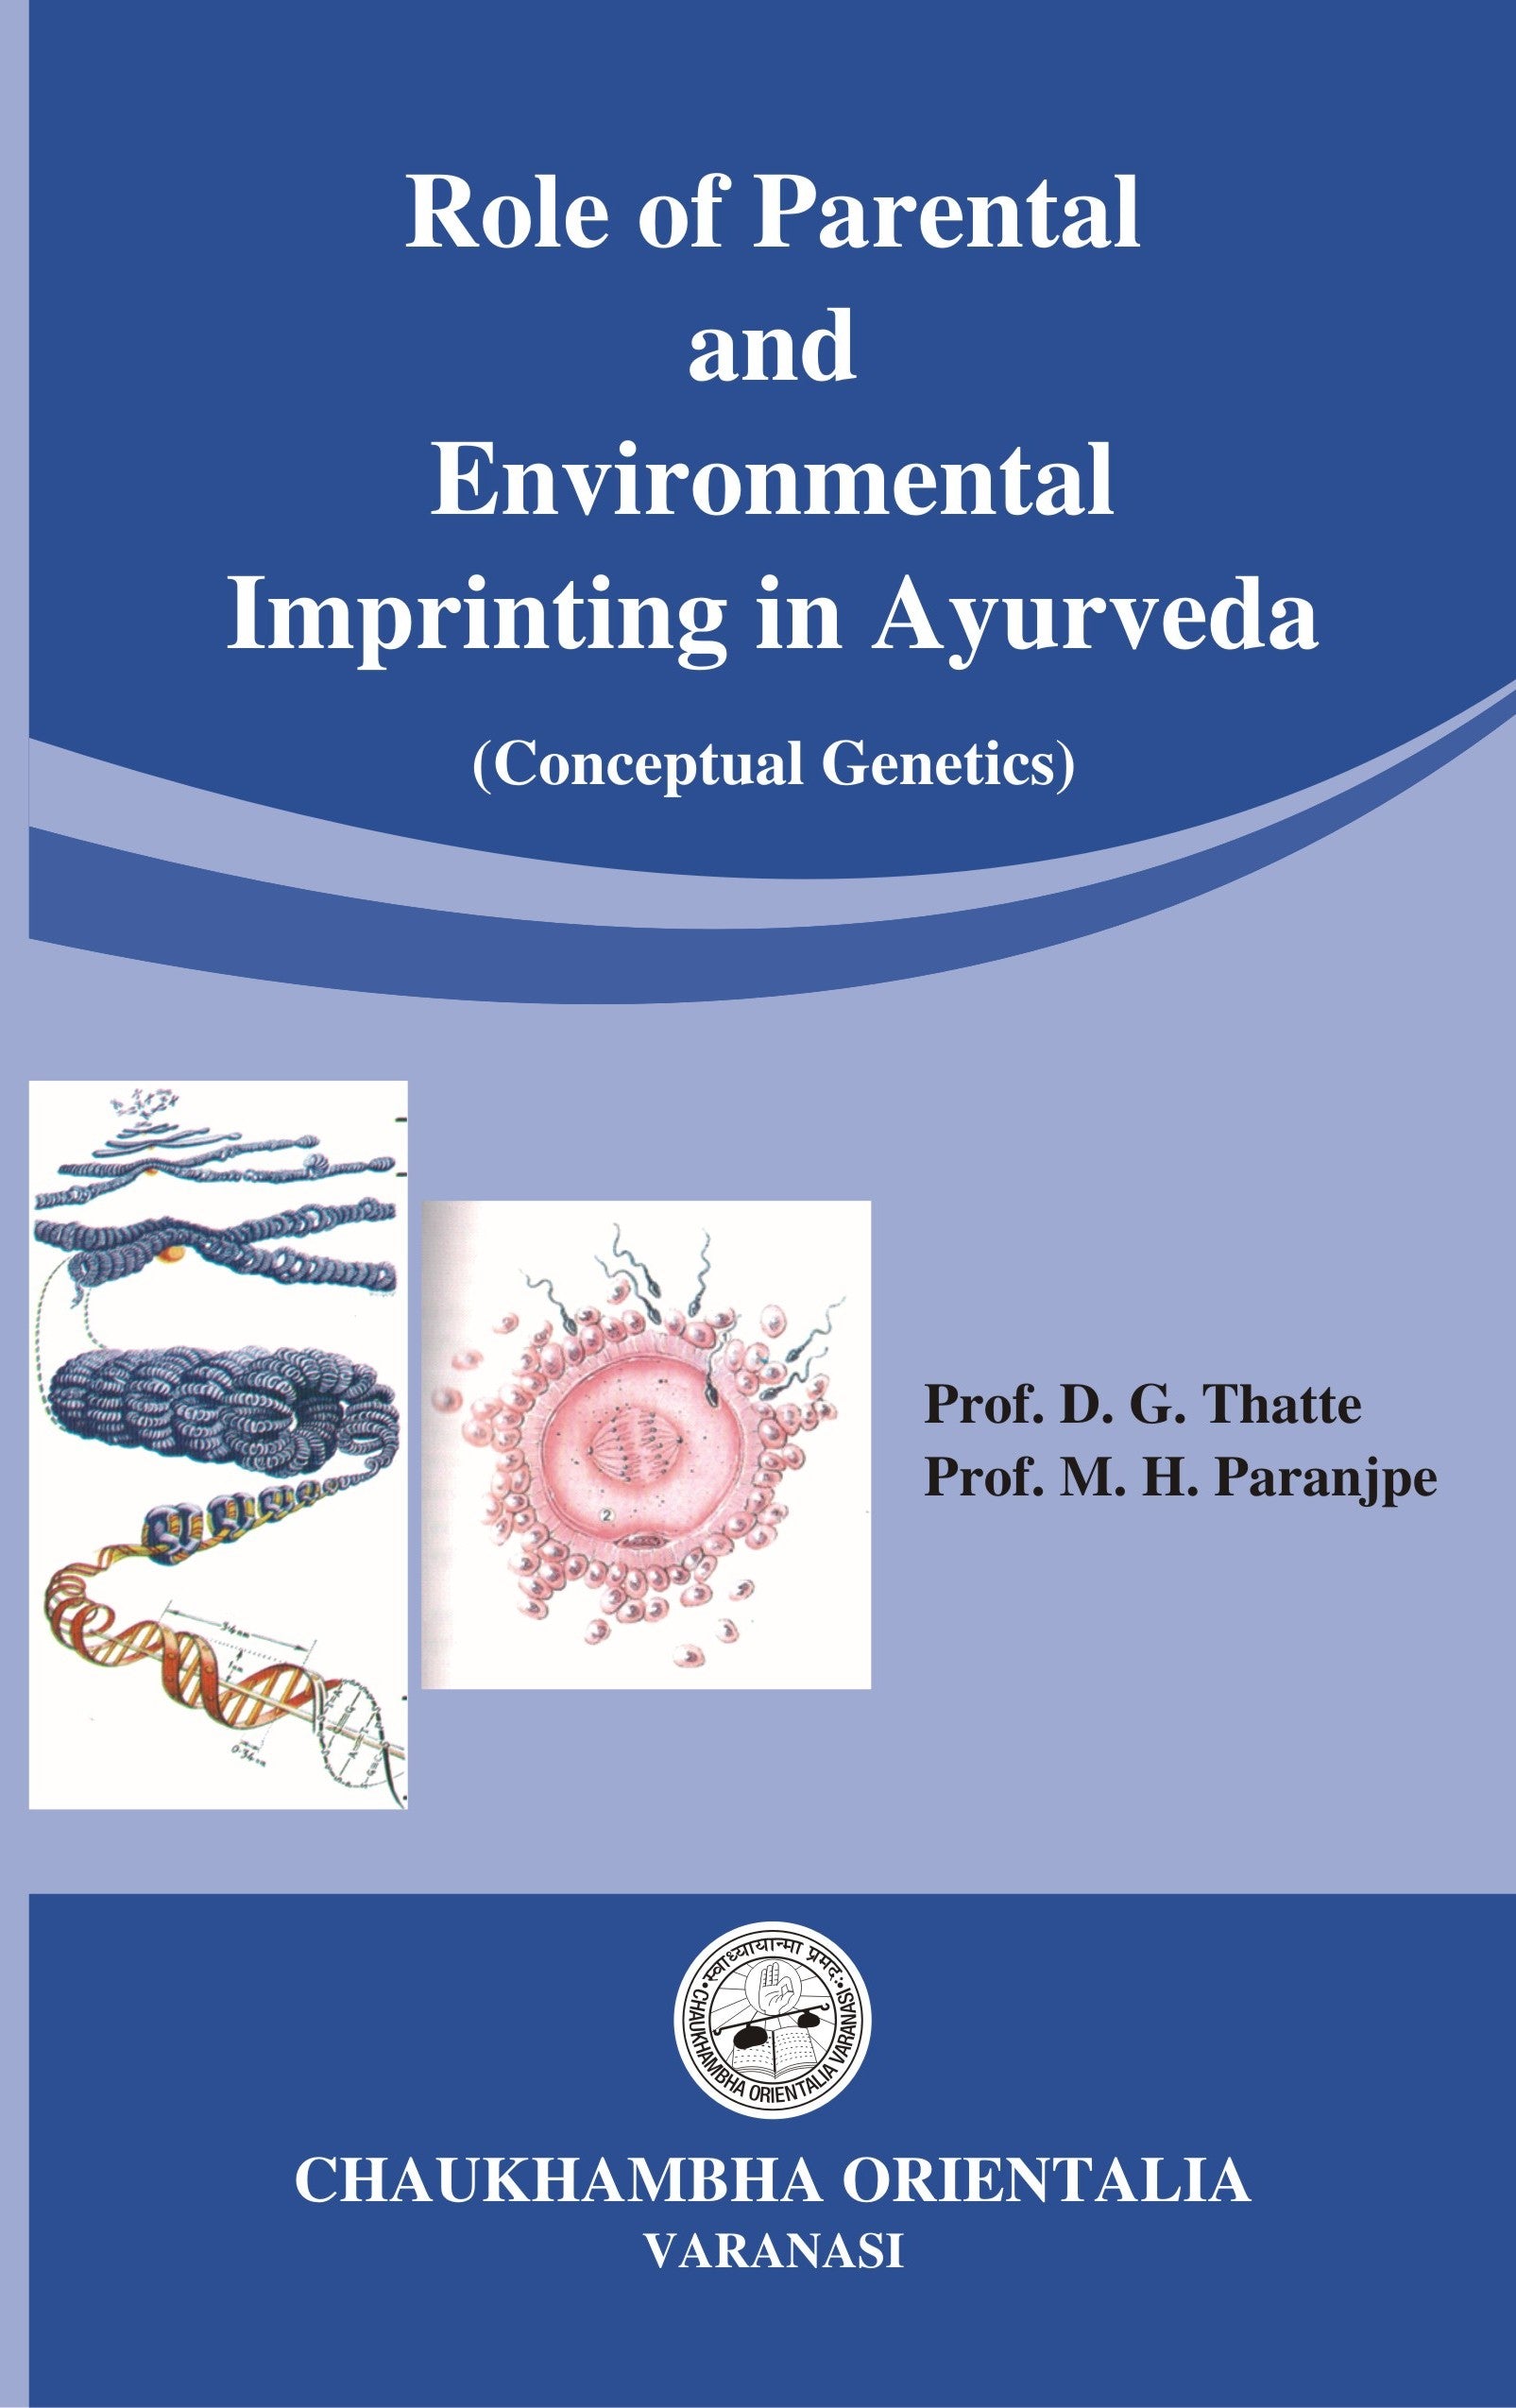 Chaukhambha Orientalia Role of Parental and Environmental Imprinting in Ayurveda